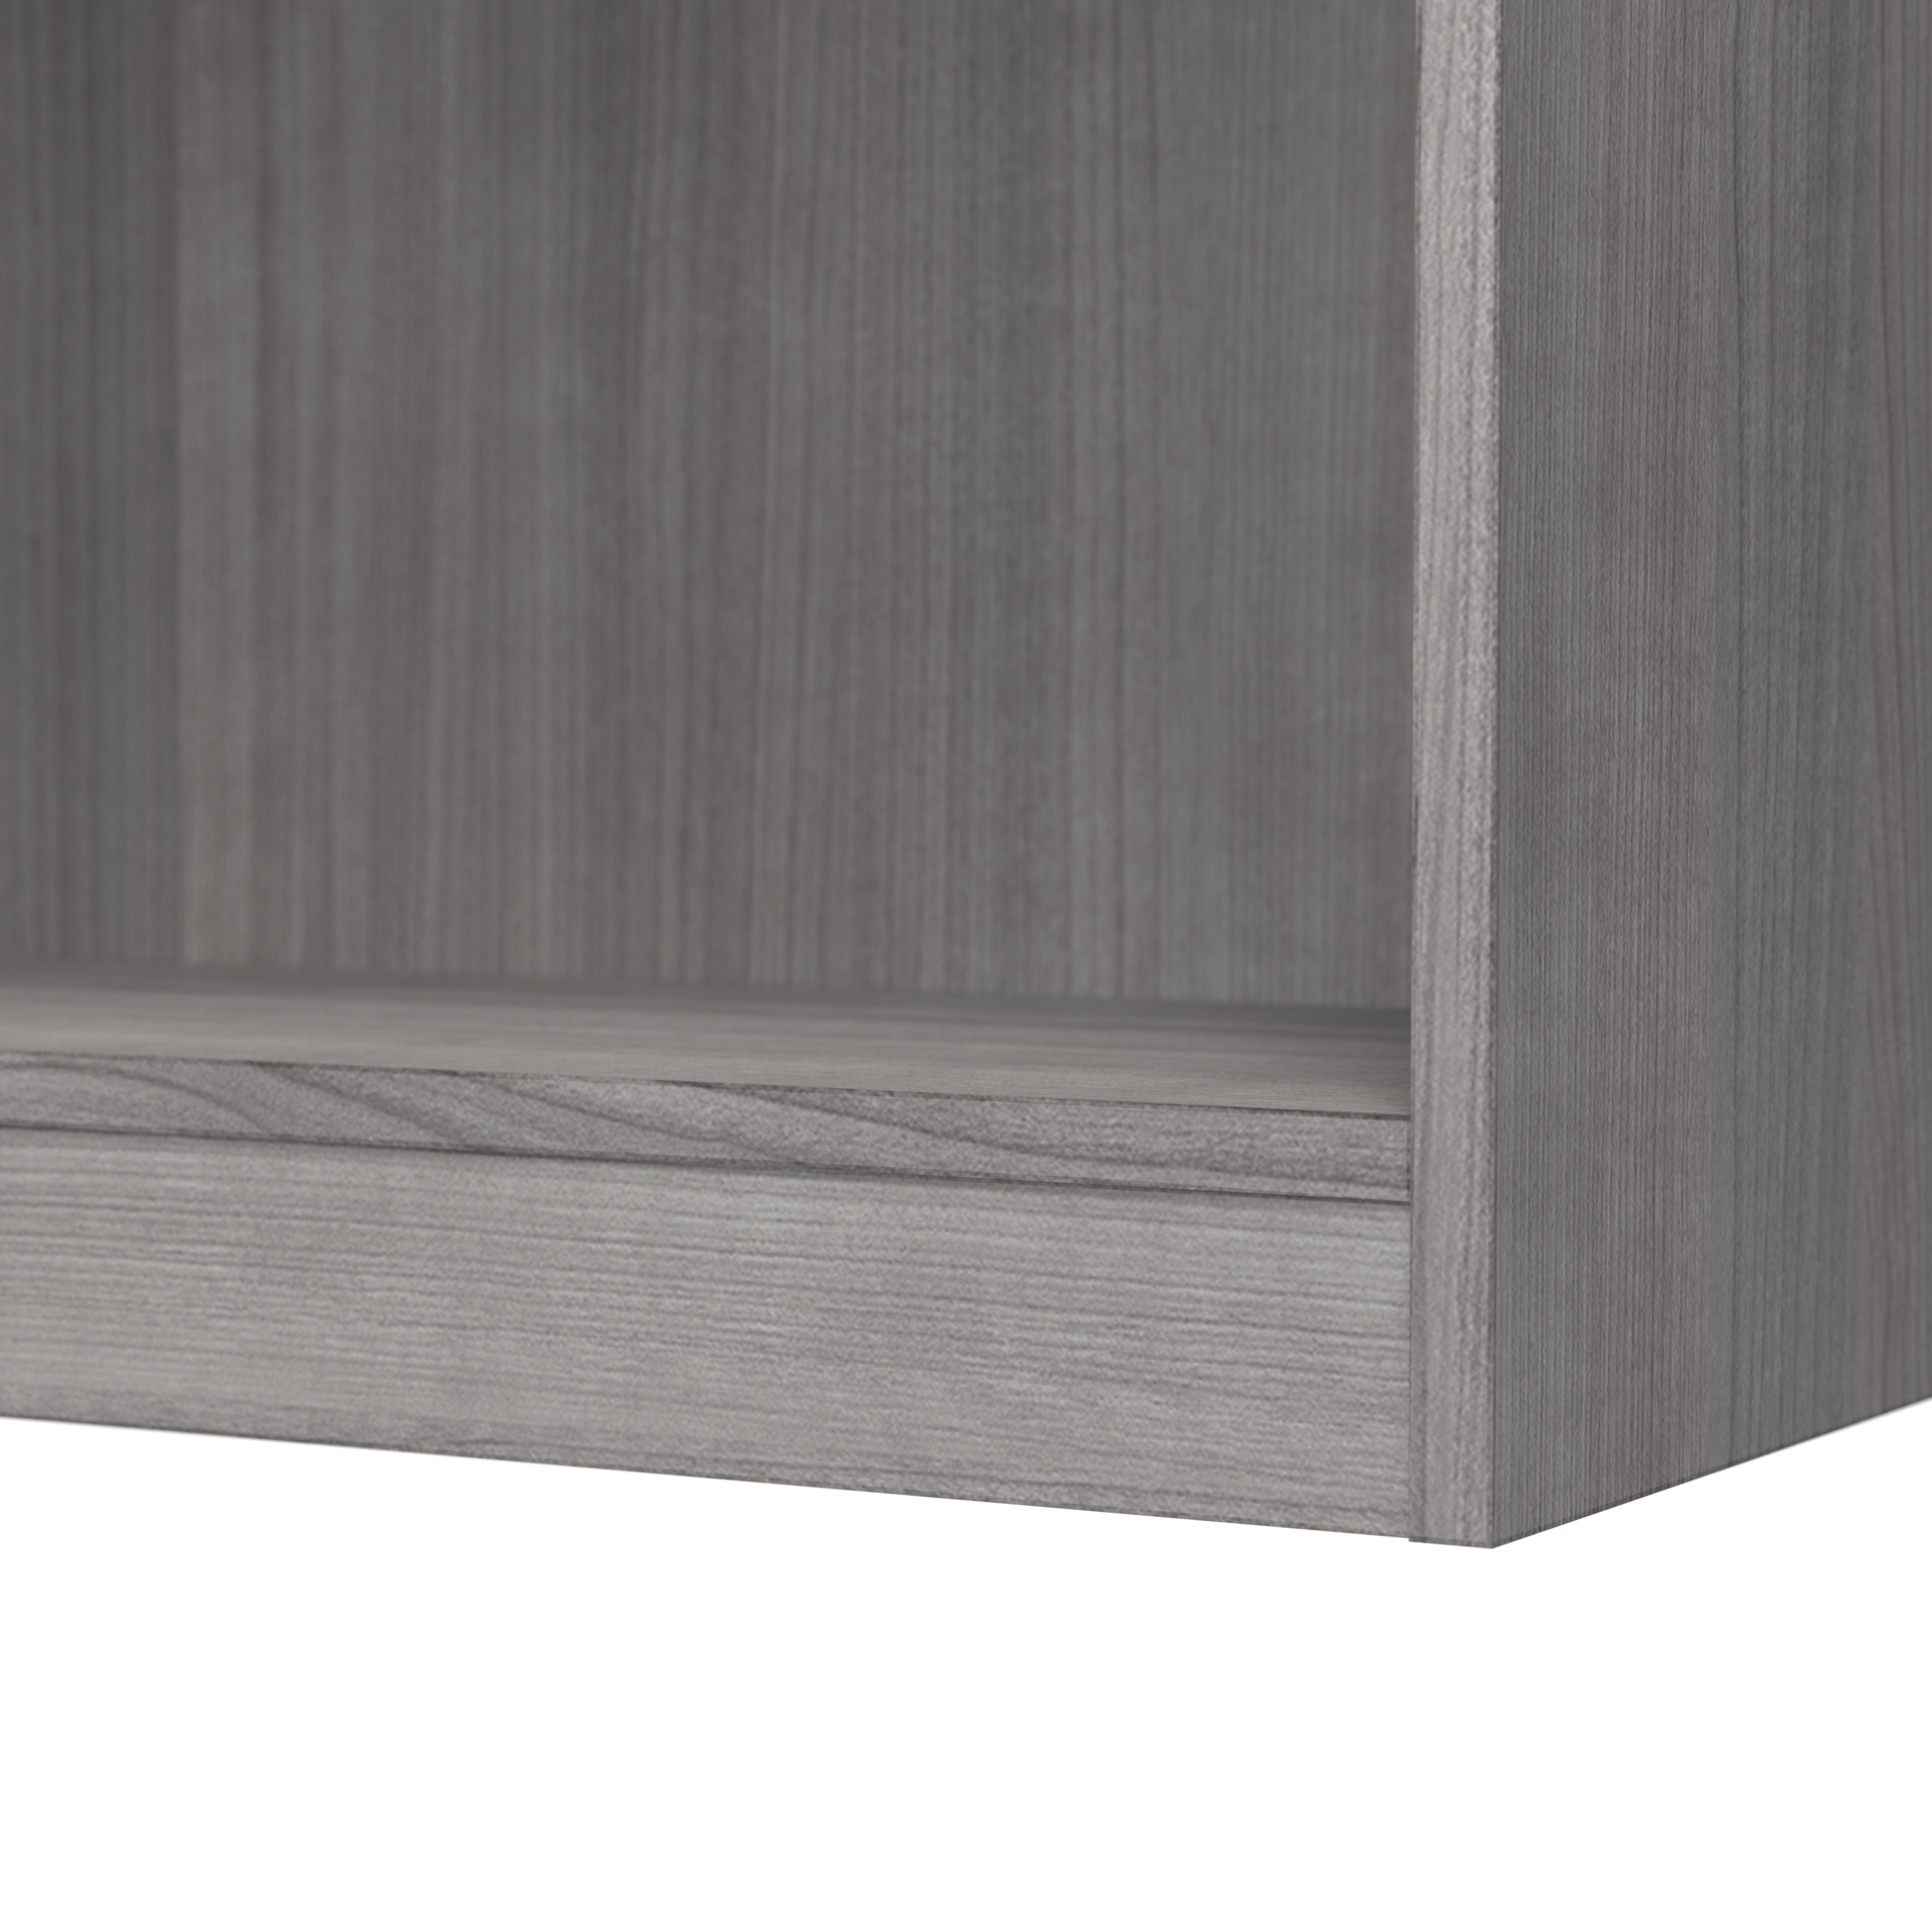 Shop Bush Furniture Universal Tall 5 Shelf Bookcase - Set of 2 05 UB003PG #color_platinum gray